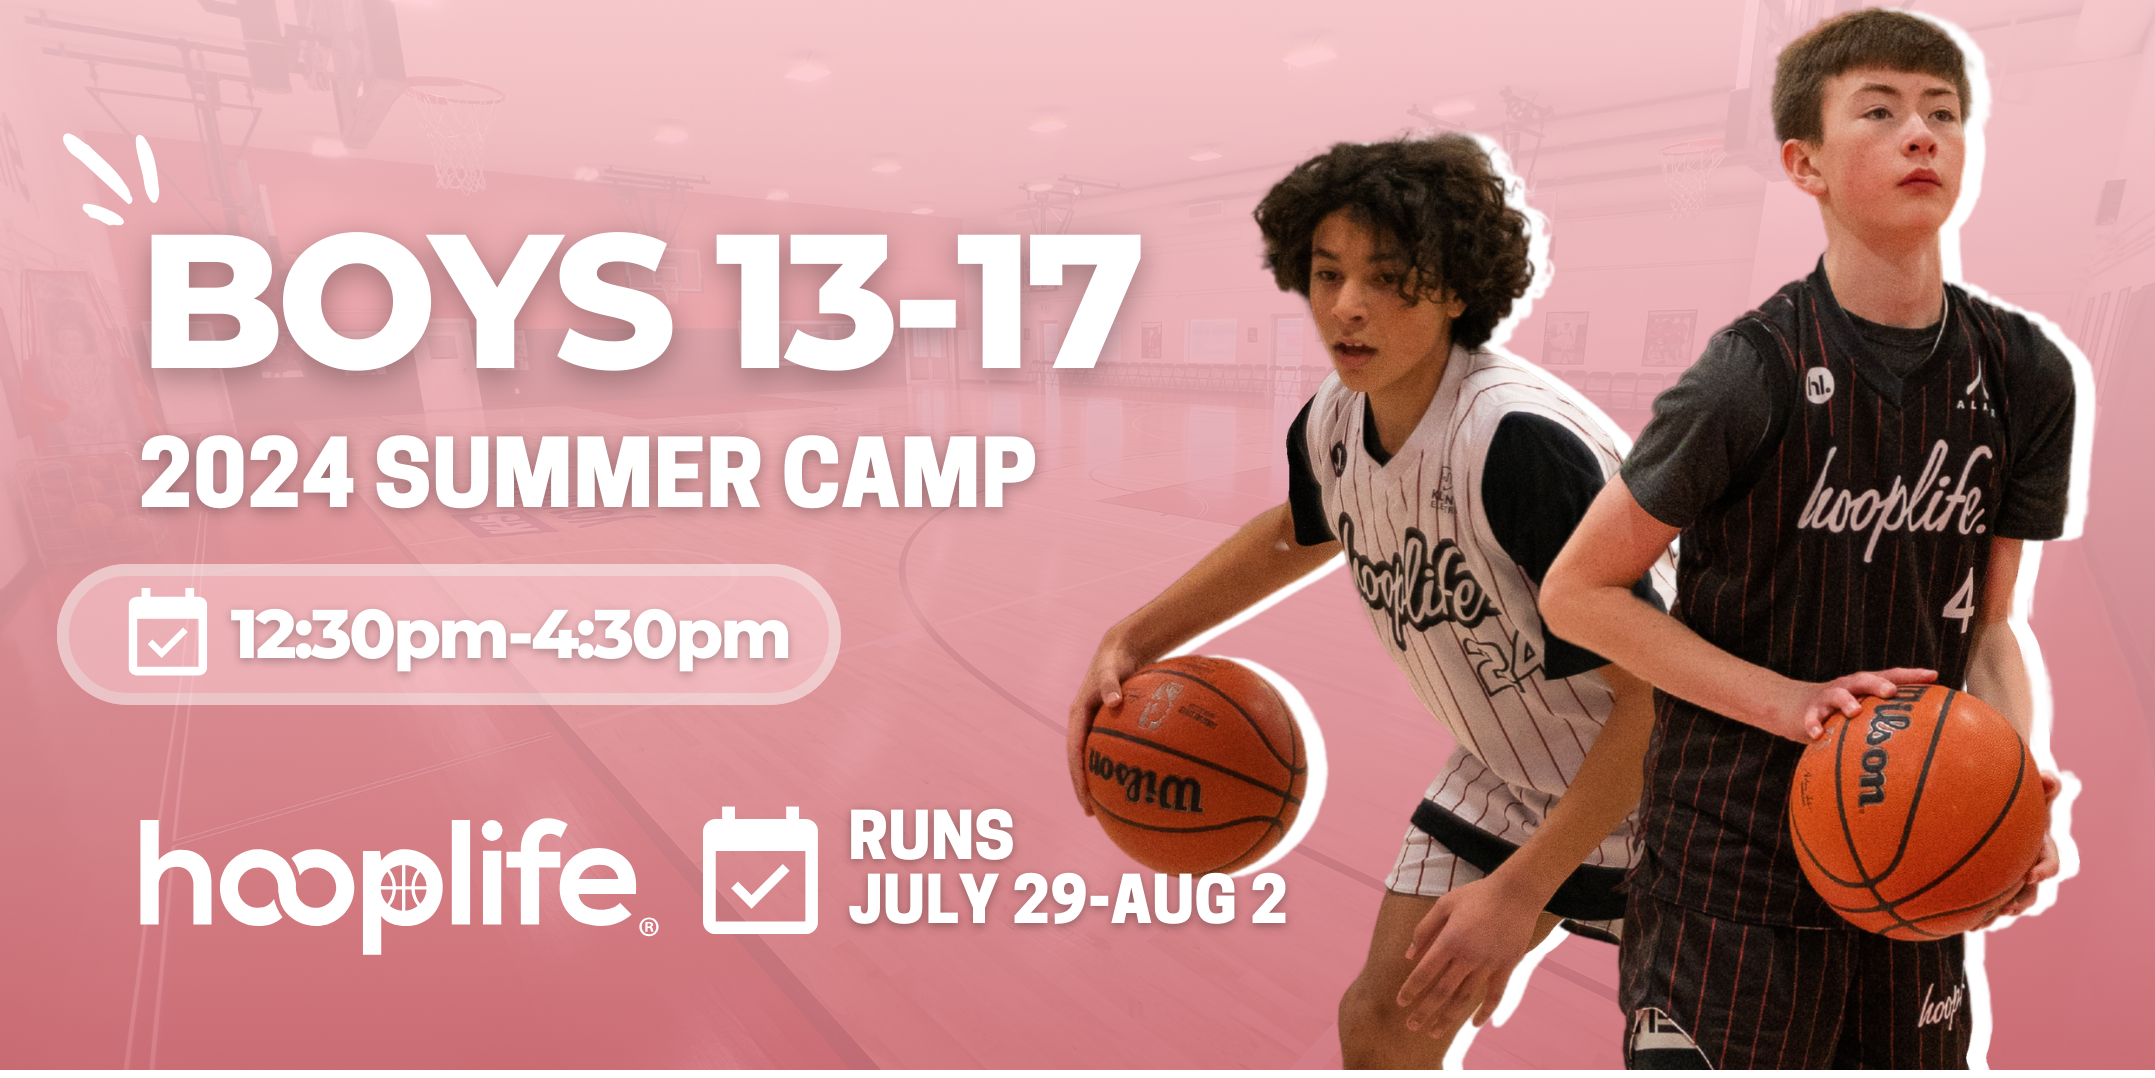 Boys 13-17 Summer Camp | July 29-Aug 2